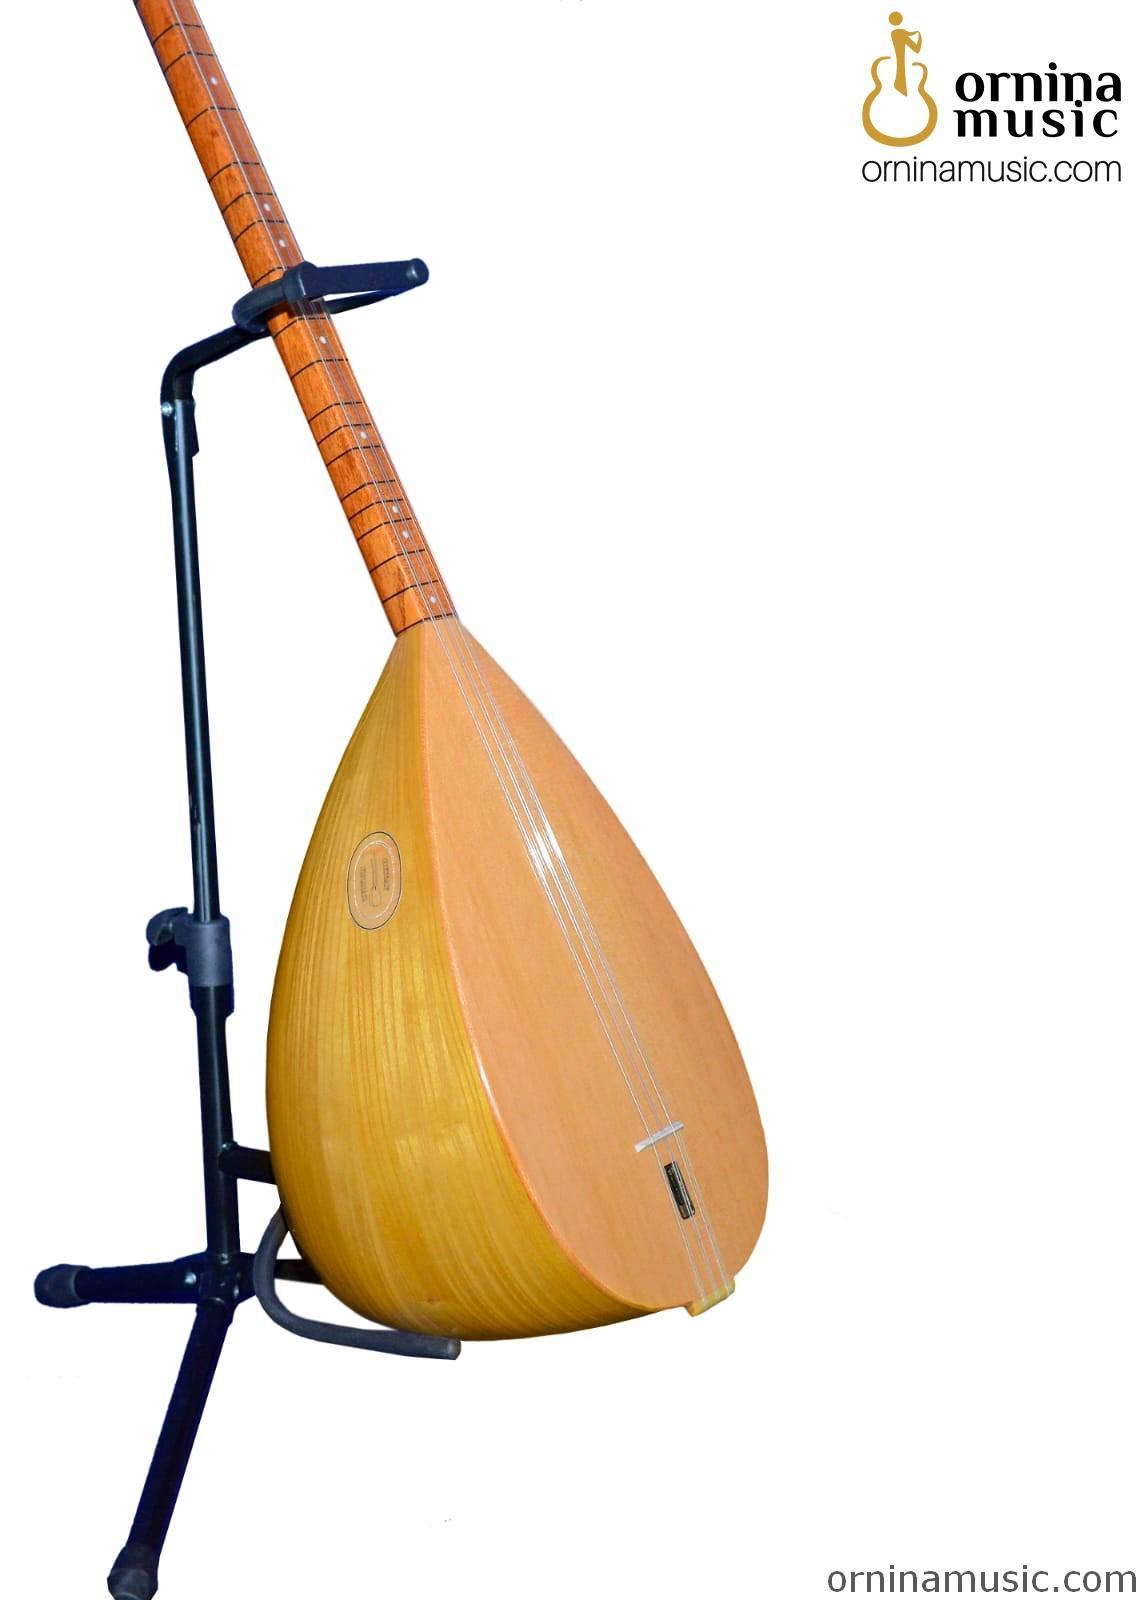  saz instrument for sale online -  the saz music instrument store